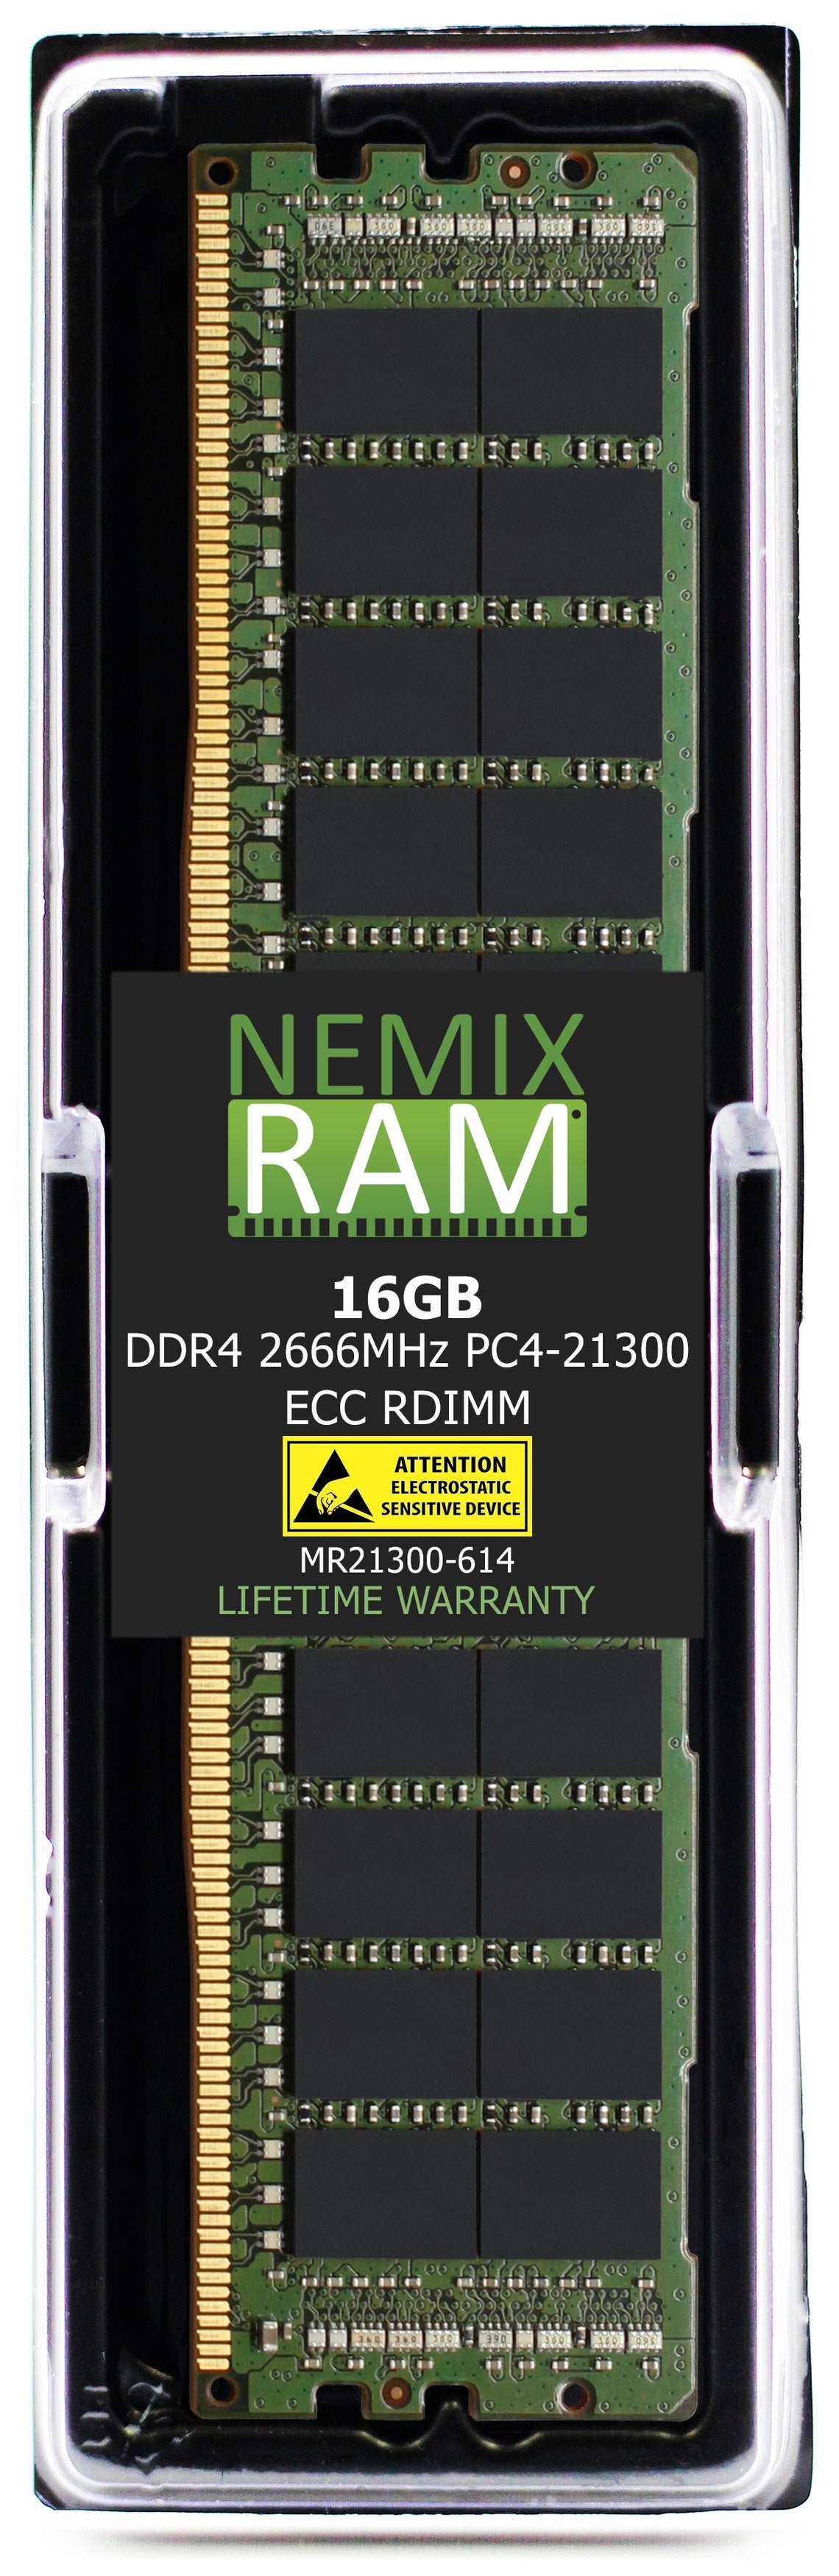 16GB DDR4 2666MHZ PC4-21300 RDIMM Compatible with Supermicro MEM-DR416L-SL07-ER26